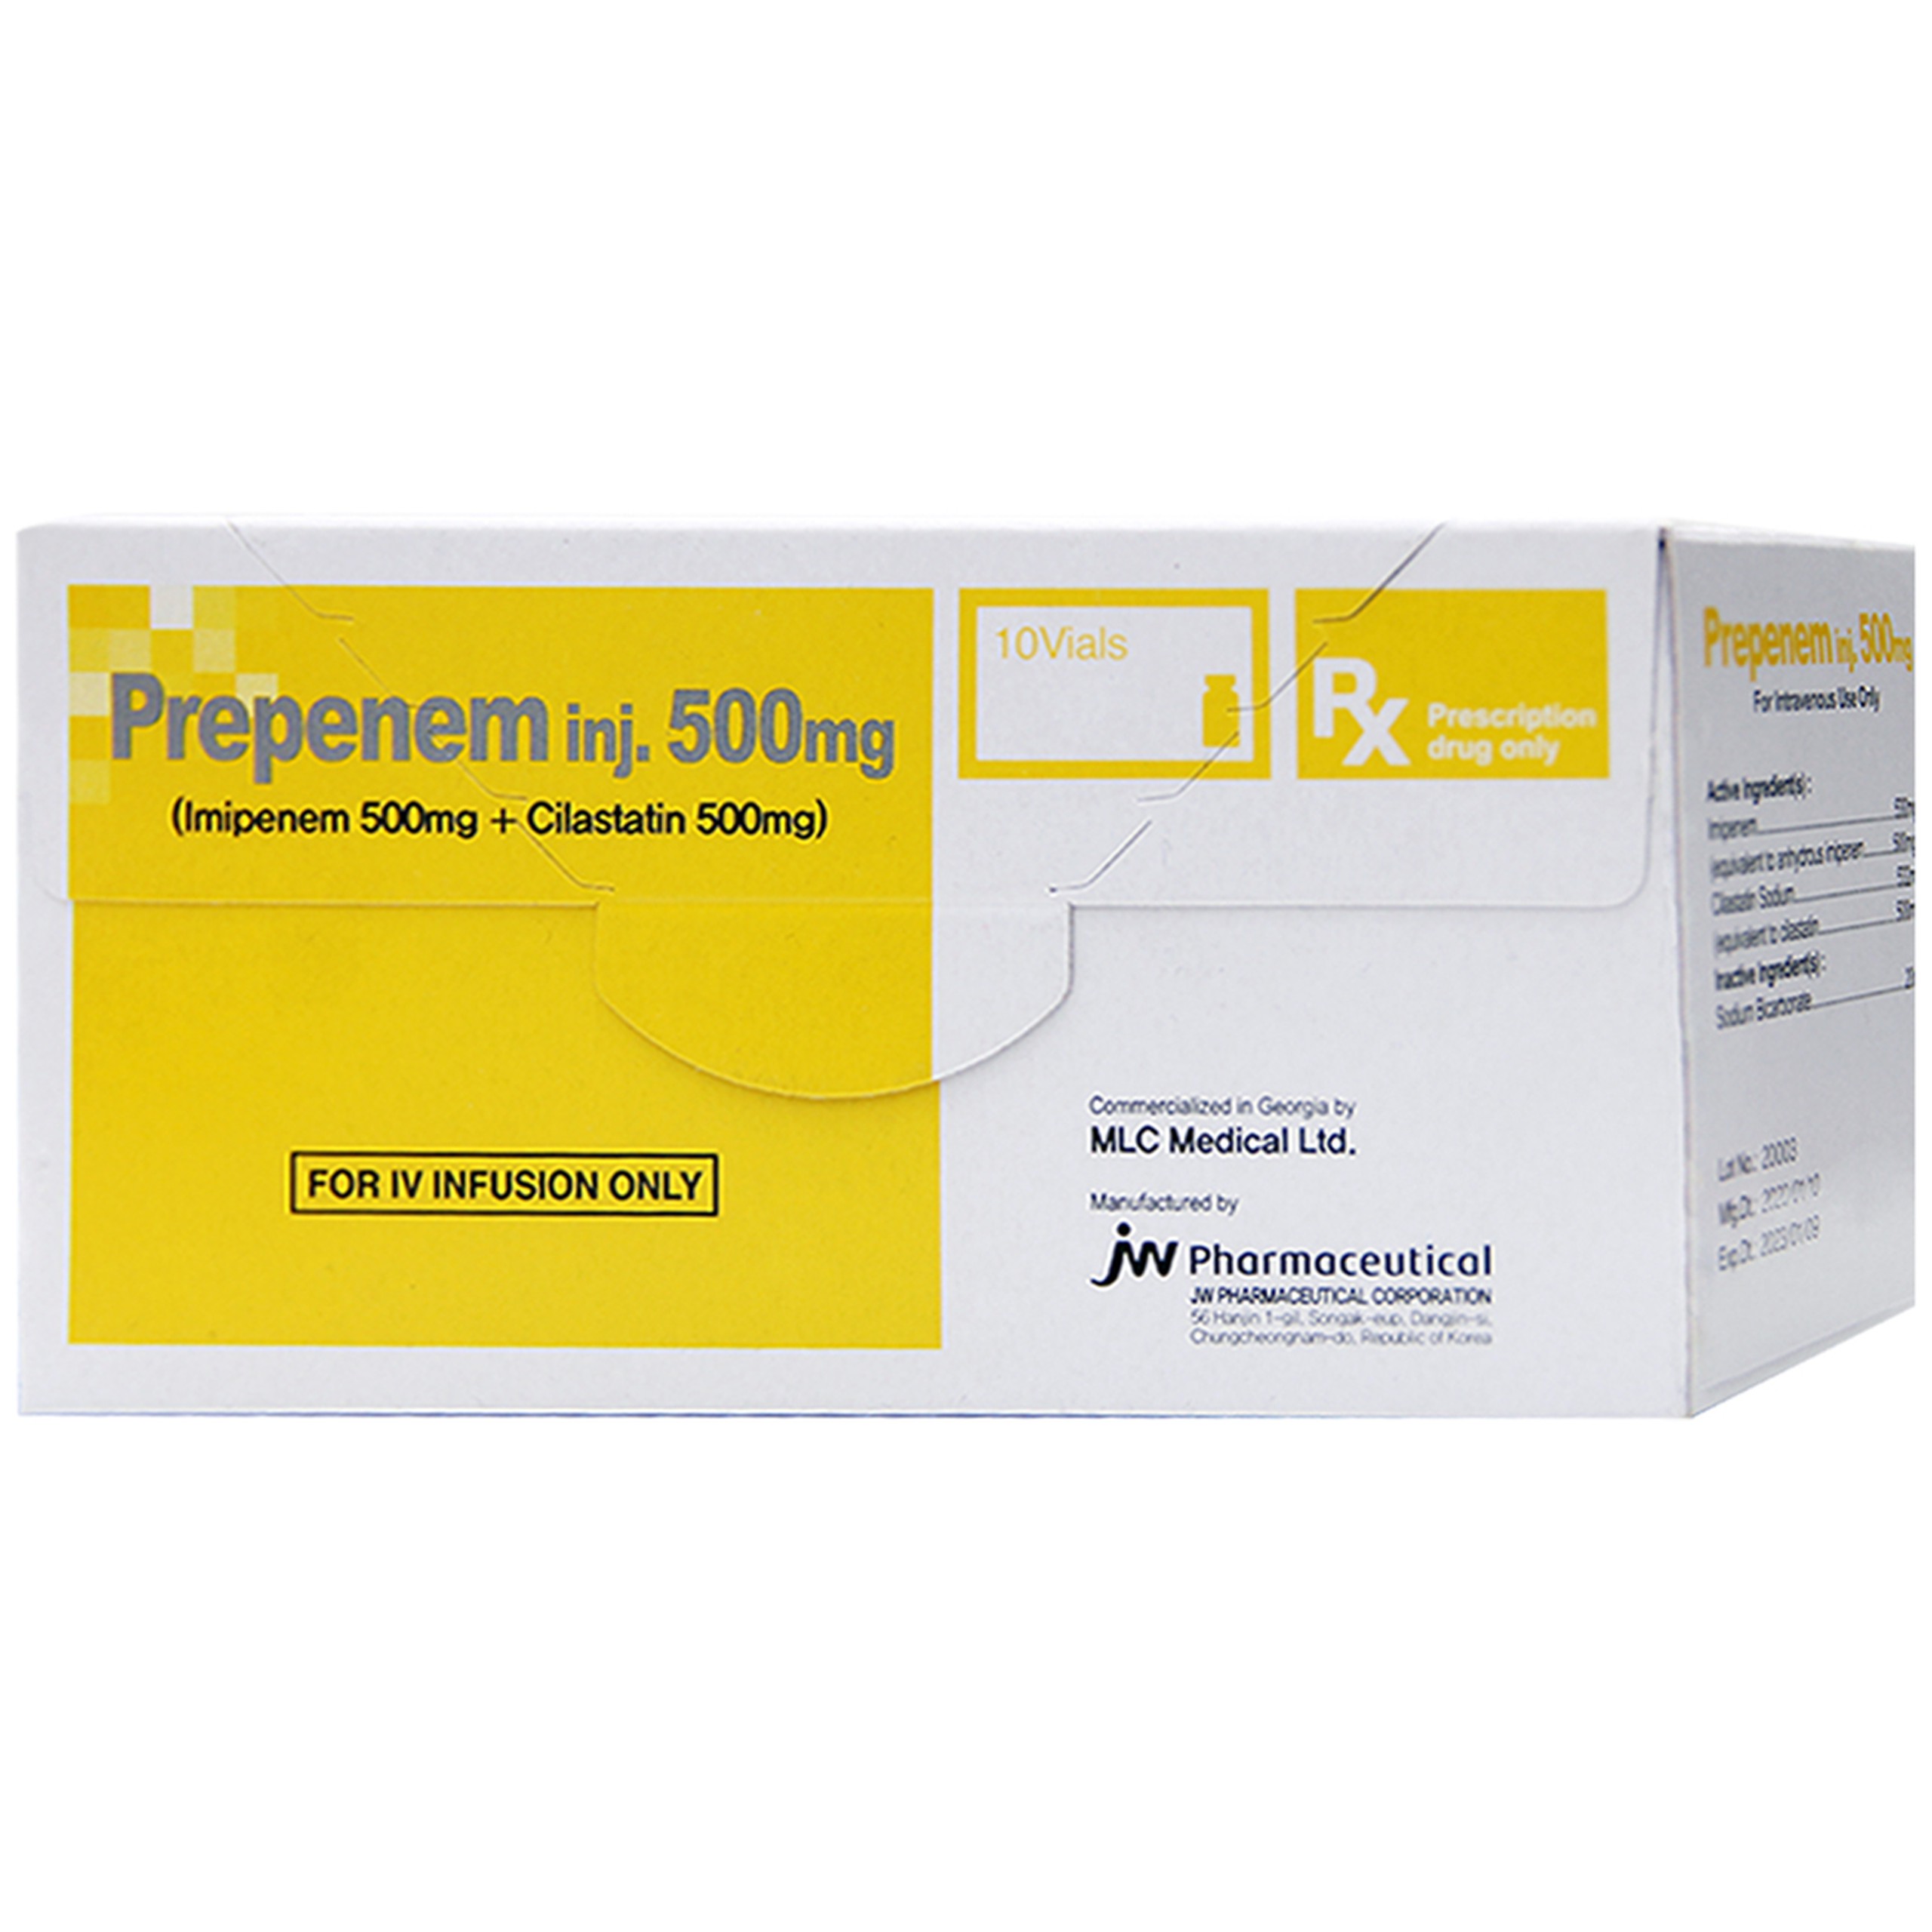 Thuốc tiêm Prepenem 500mg JW Pharmaceutical điều trị nhiễm khuẩn (1 lọ)